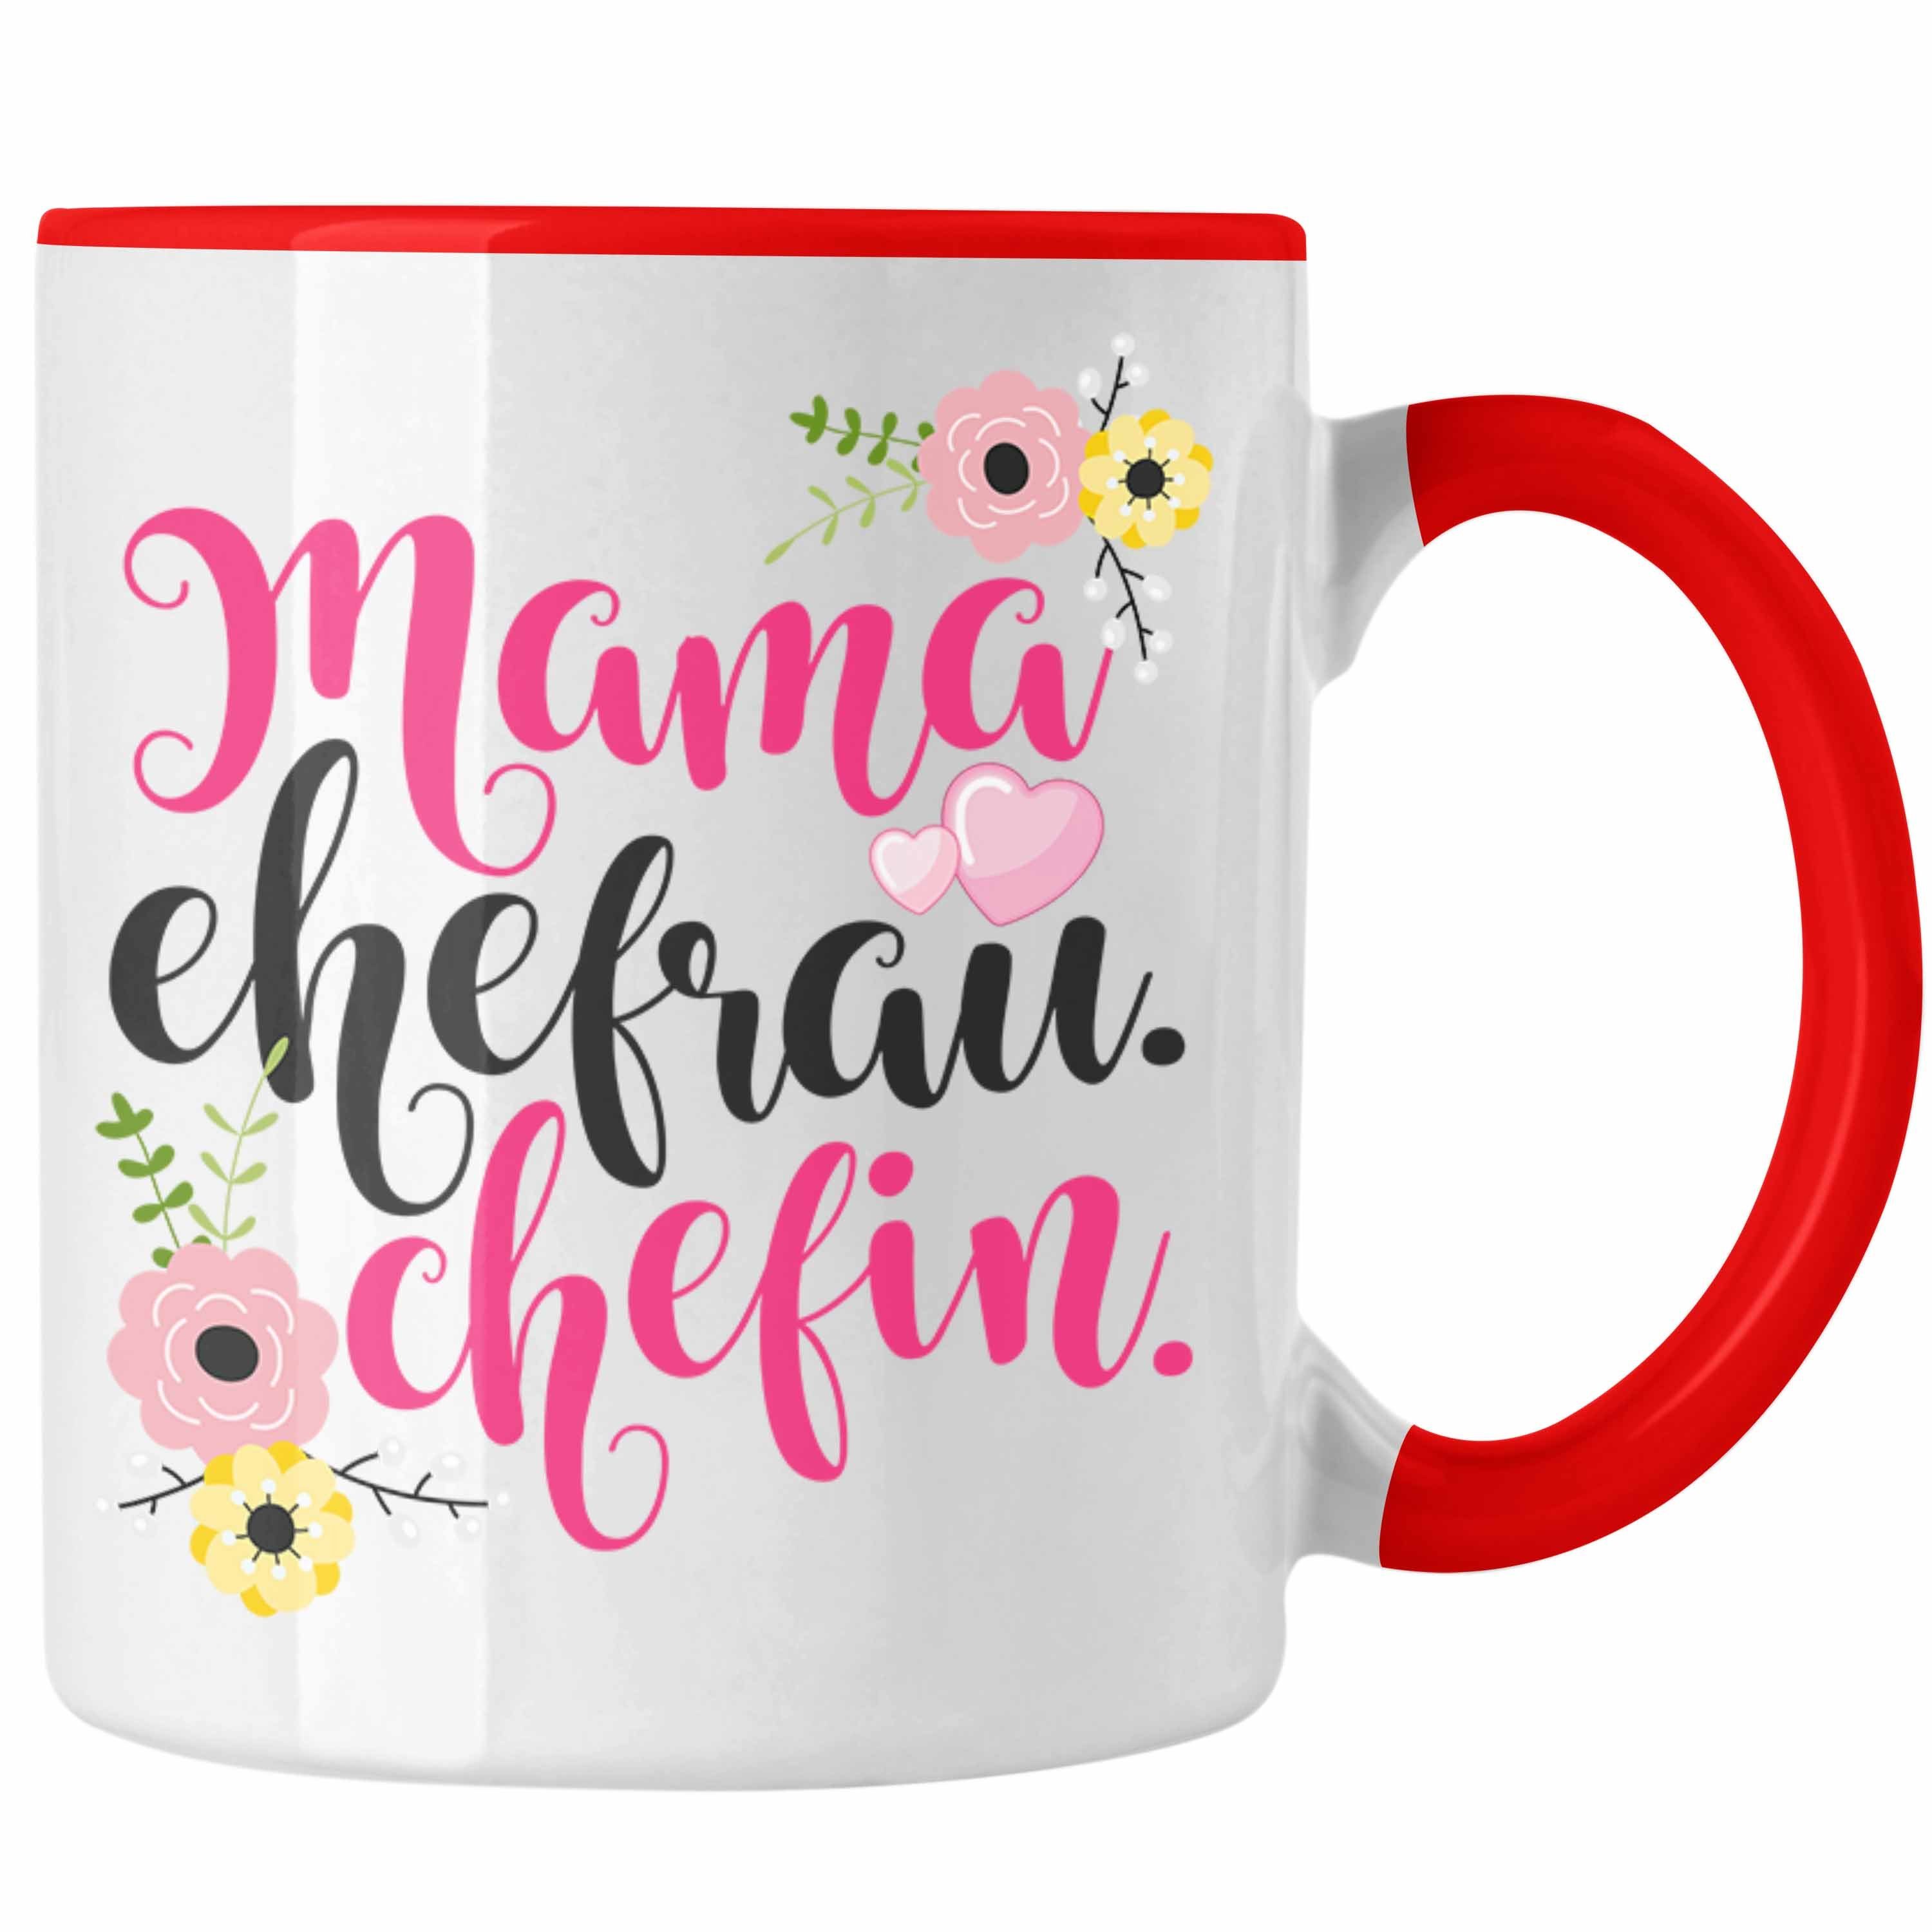 Geburtstag Beste Ehefrau Frau Trendation Muttertag Chefin Mama Tasse - Rot Tasse Trendation Mutter Chefin Geschenk